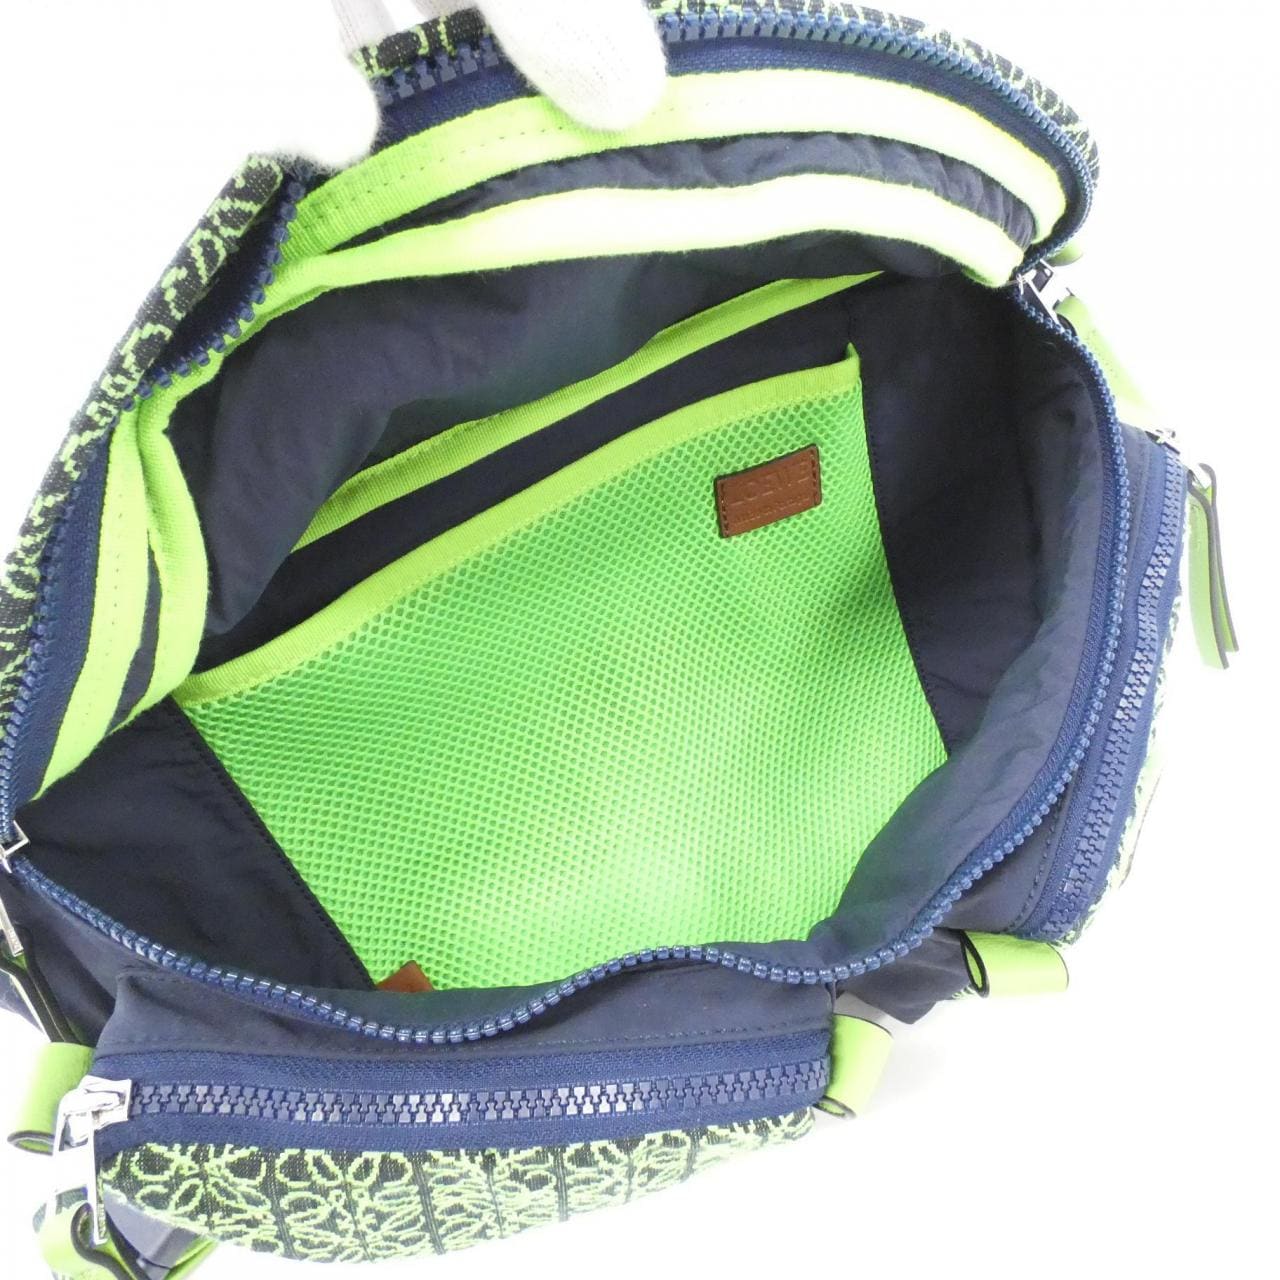 [BRAND NEW] Loewe Anagram Bum Bag B687A26X01 Bag